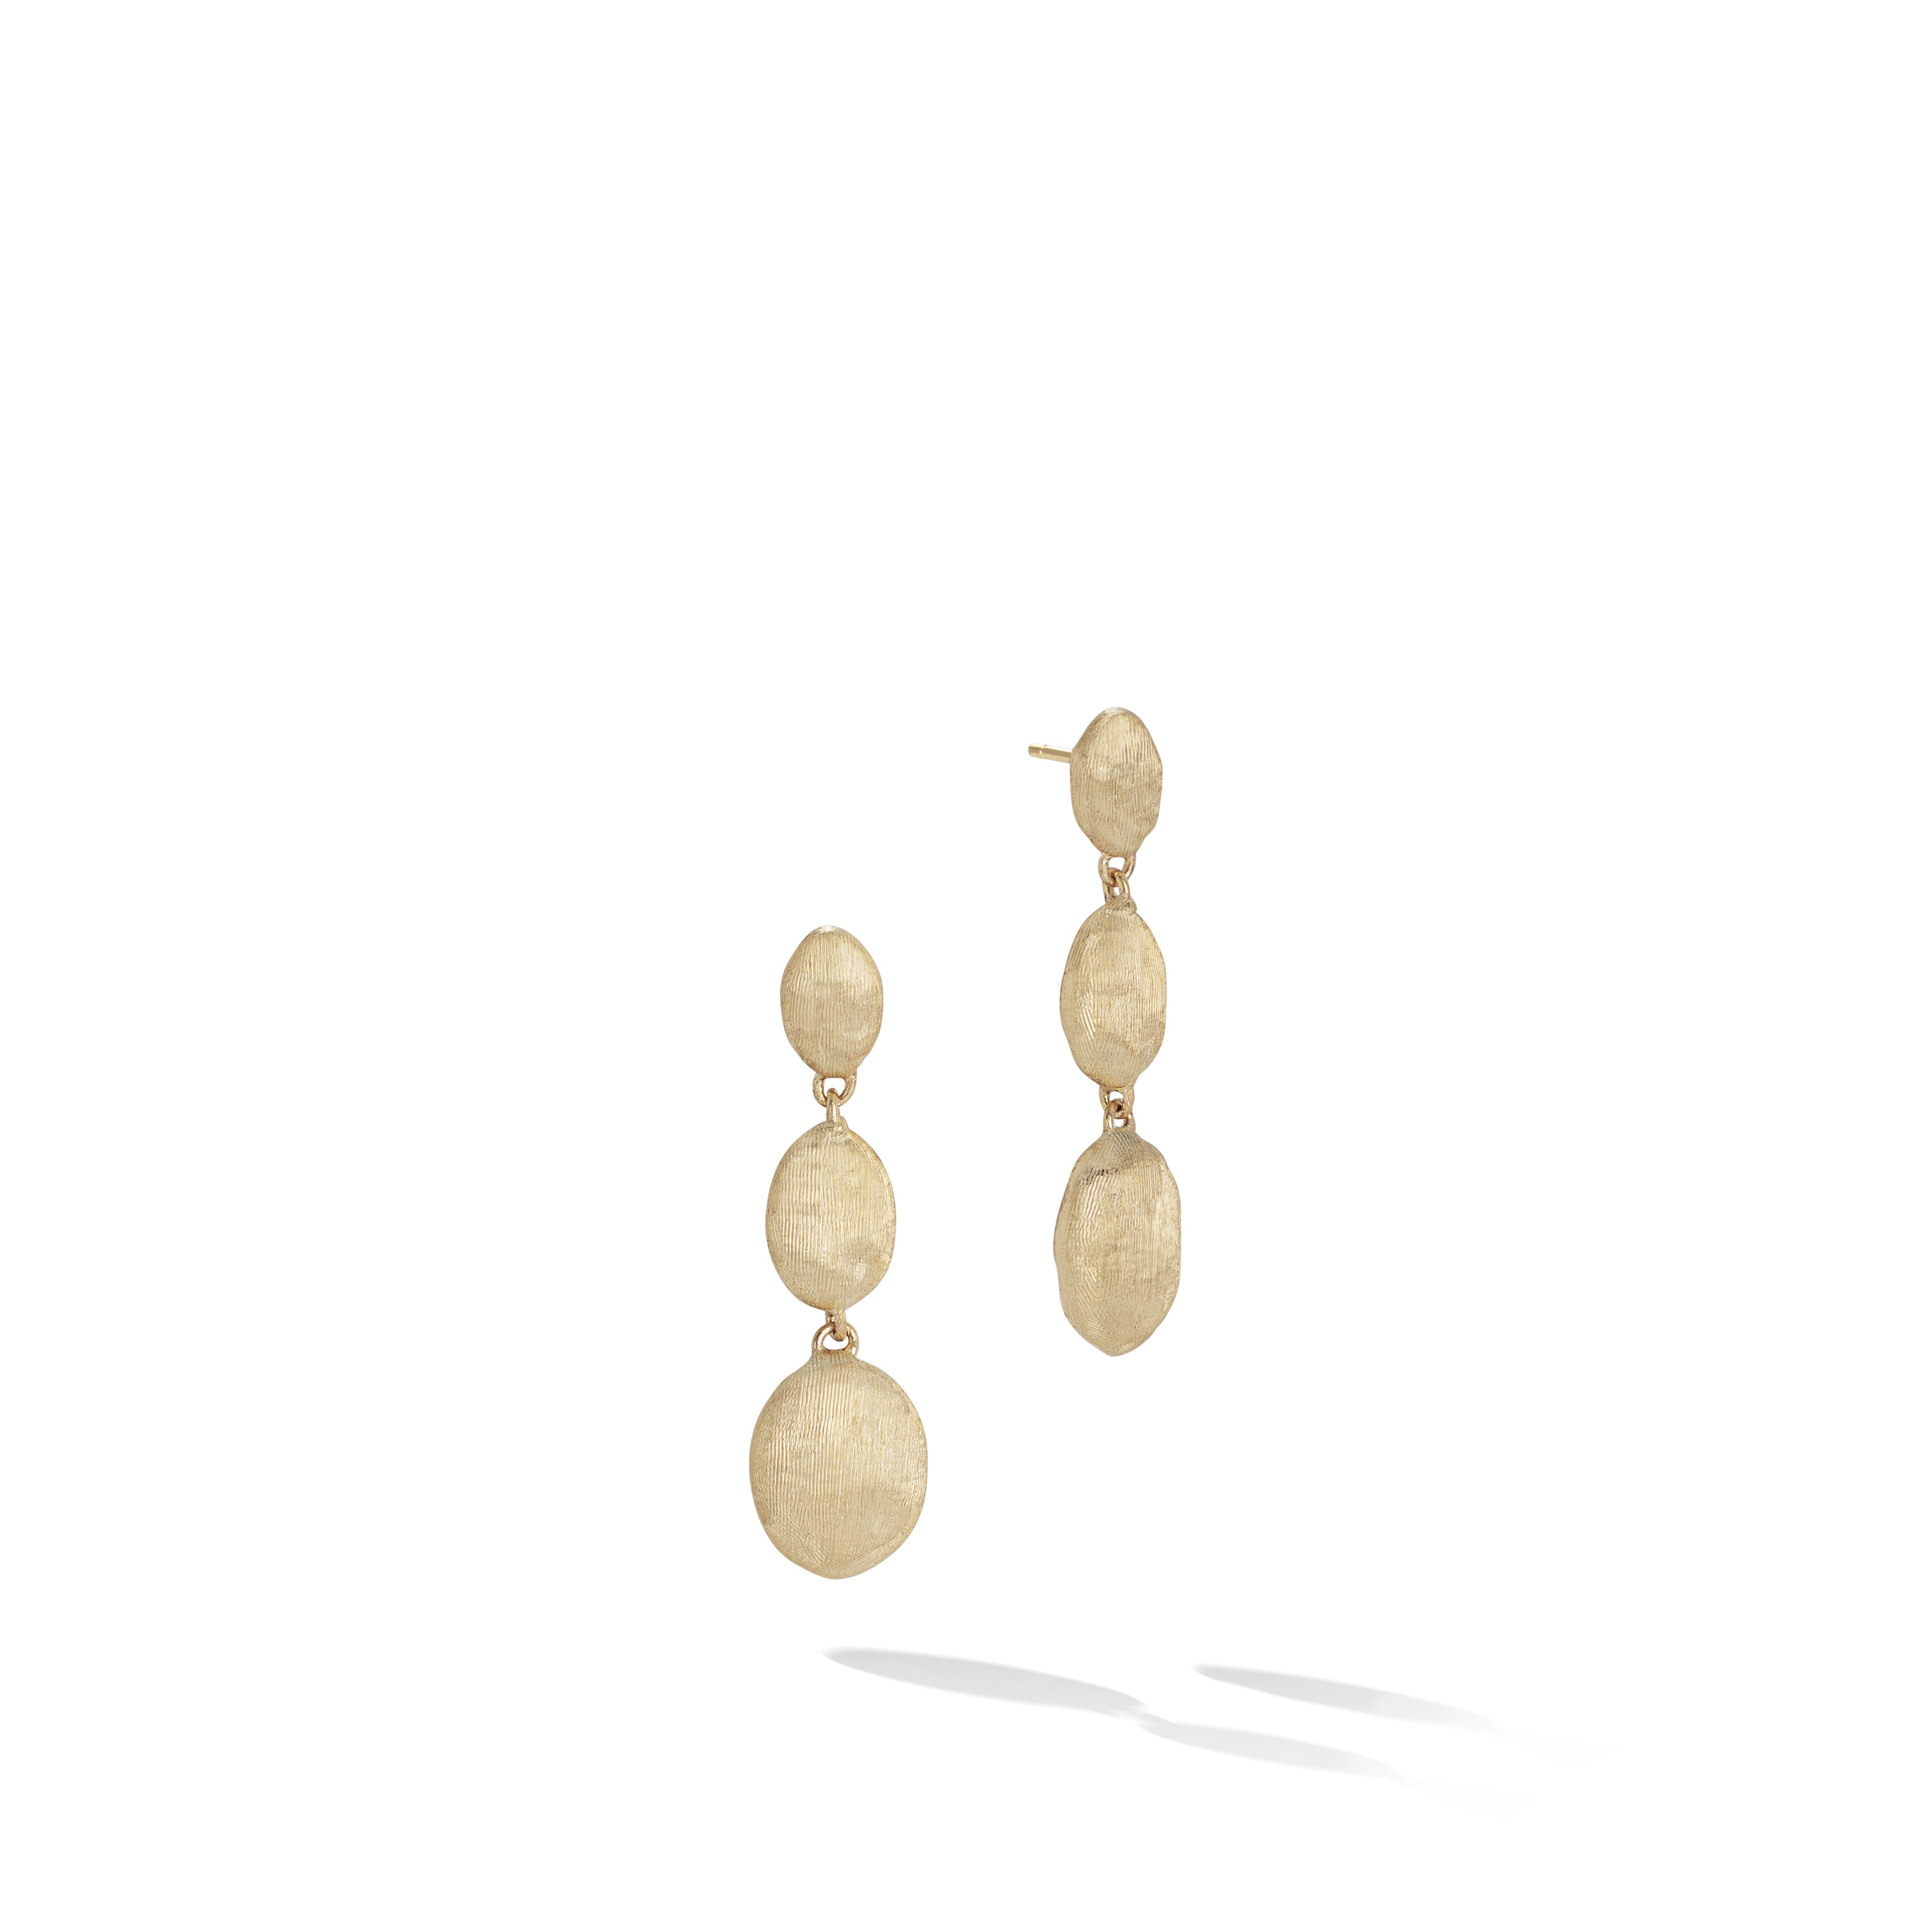 OB1234 Y 02Marco Bicego Siviglia Collection 18k Yellow Gold Triple Drop Earrings